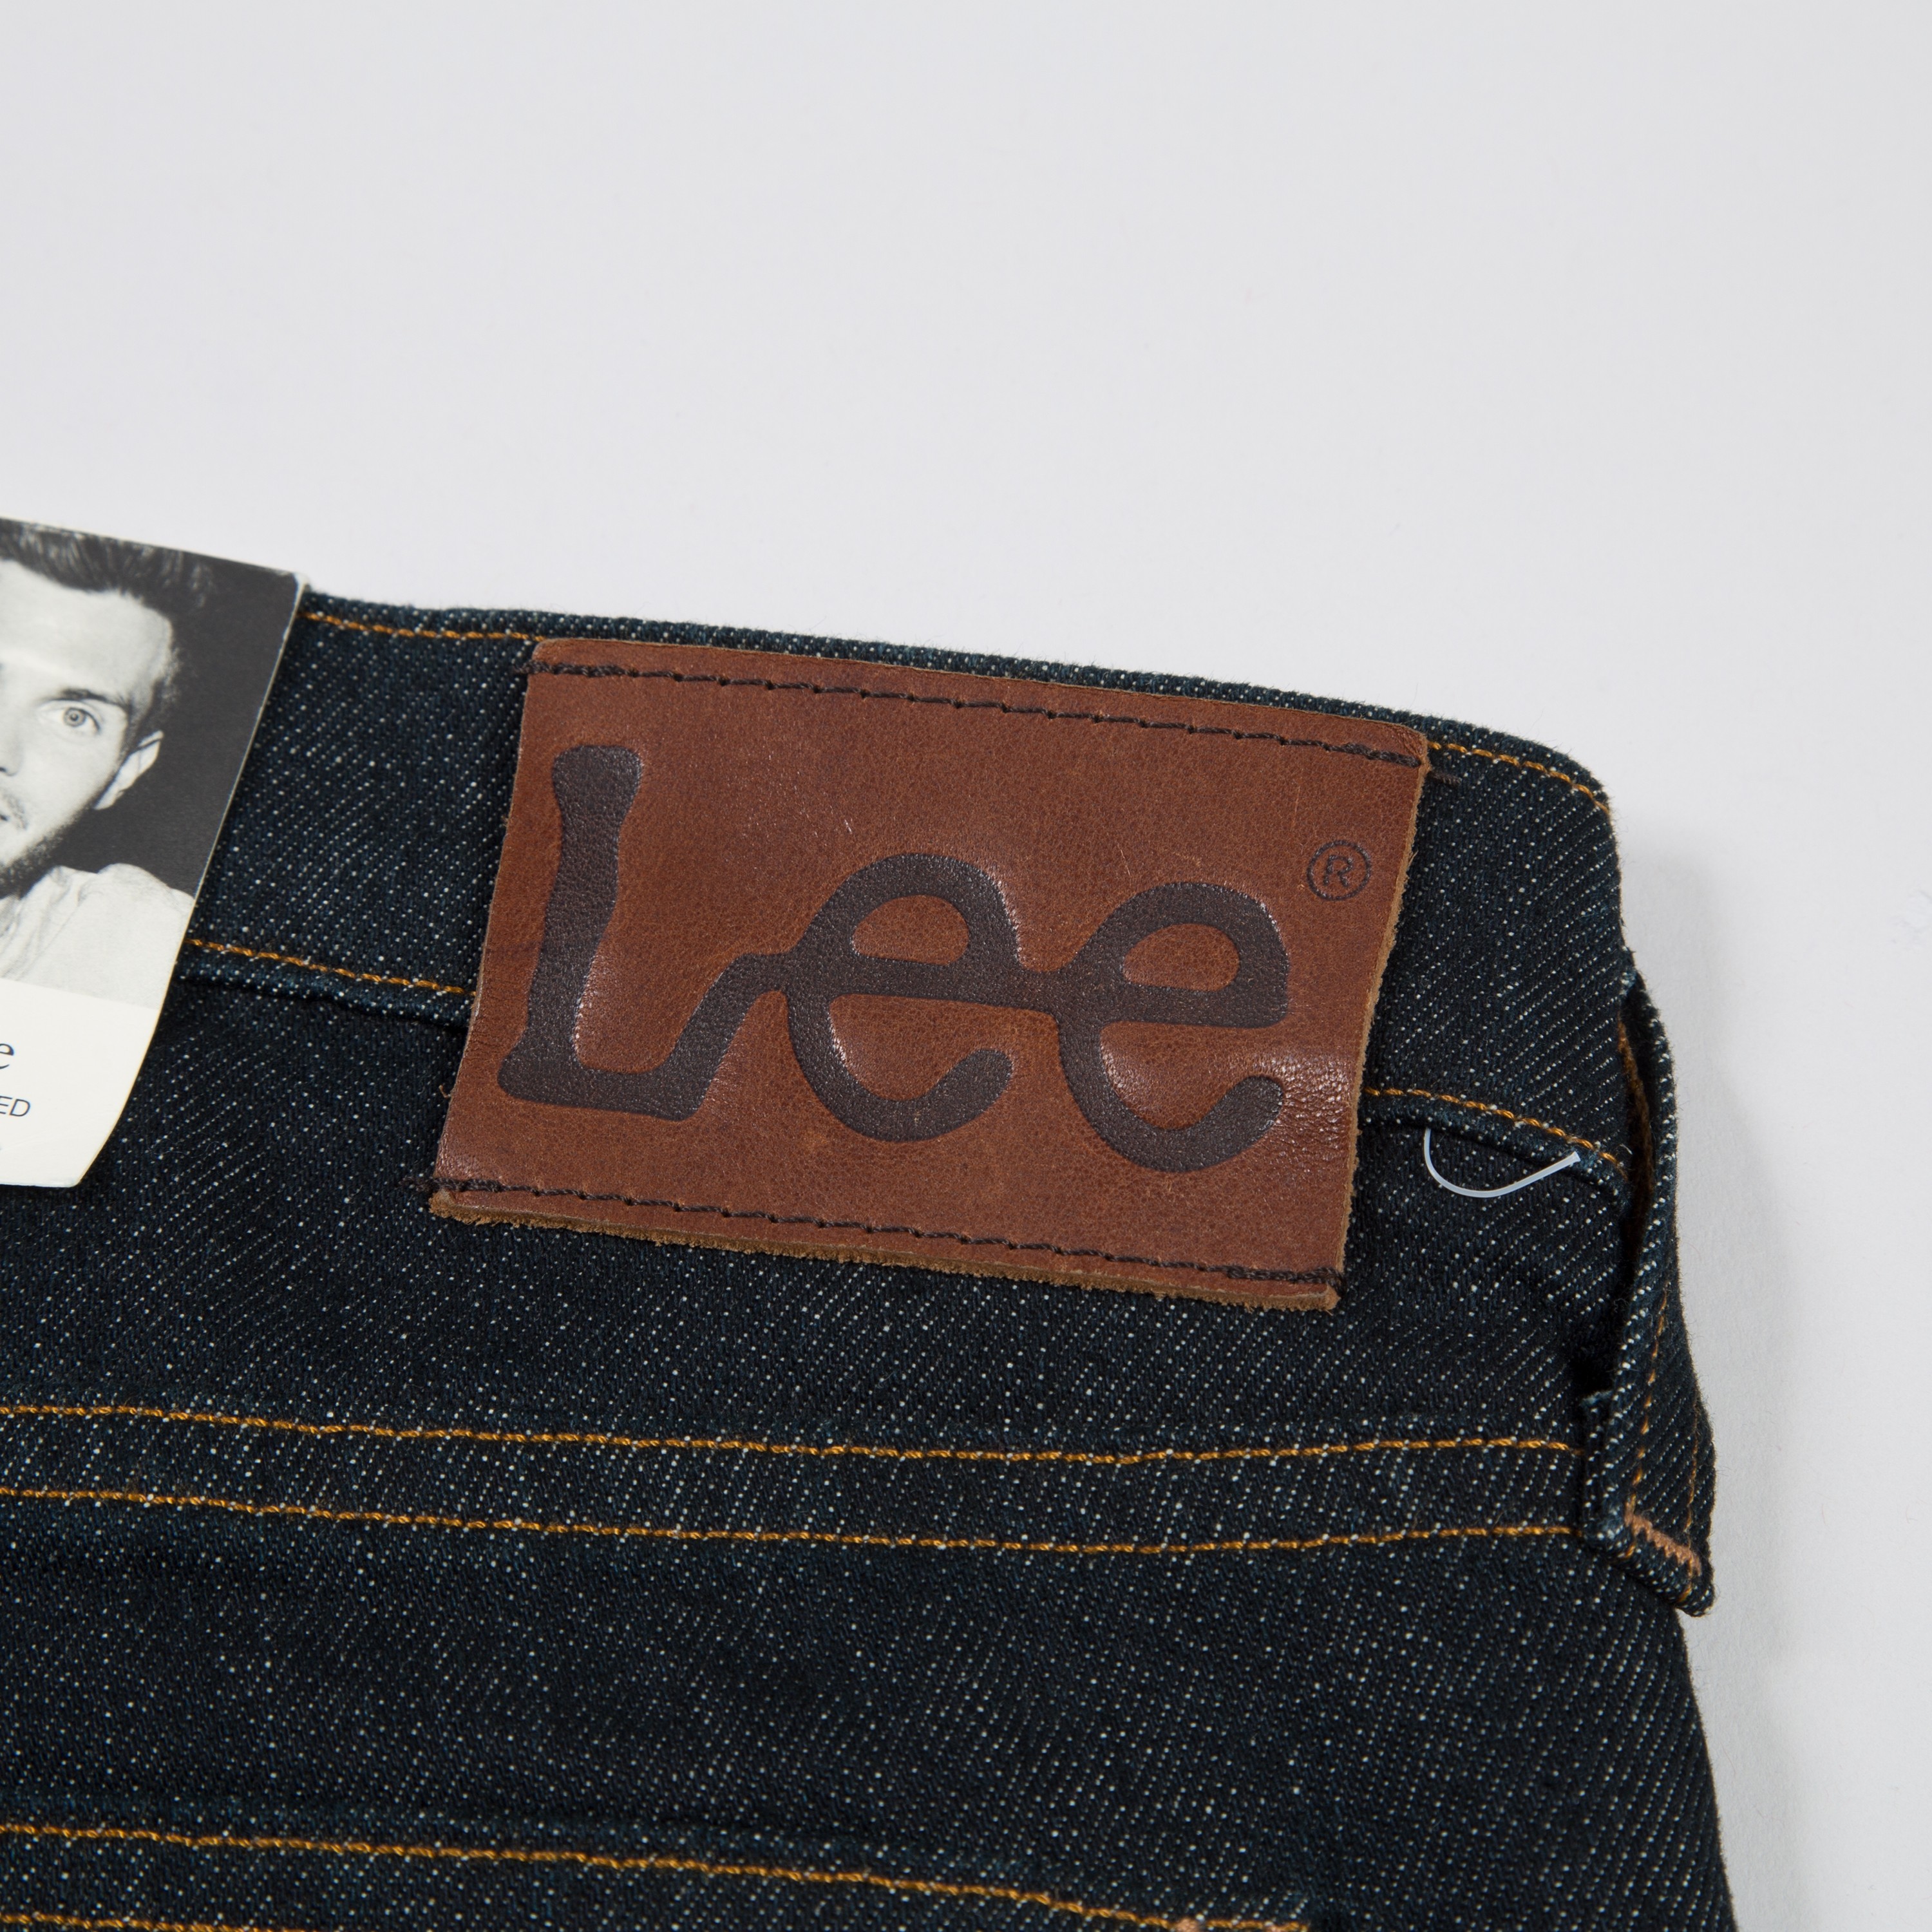 Lee Luke Slim Tapered Denim Jeans (Blue Cause) - Consortium.